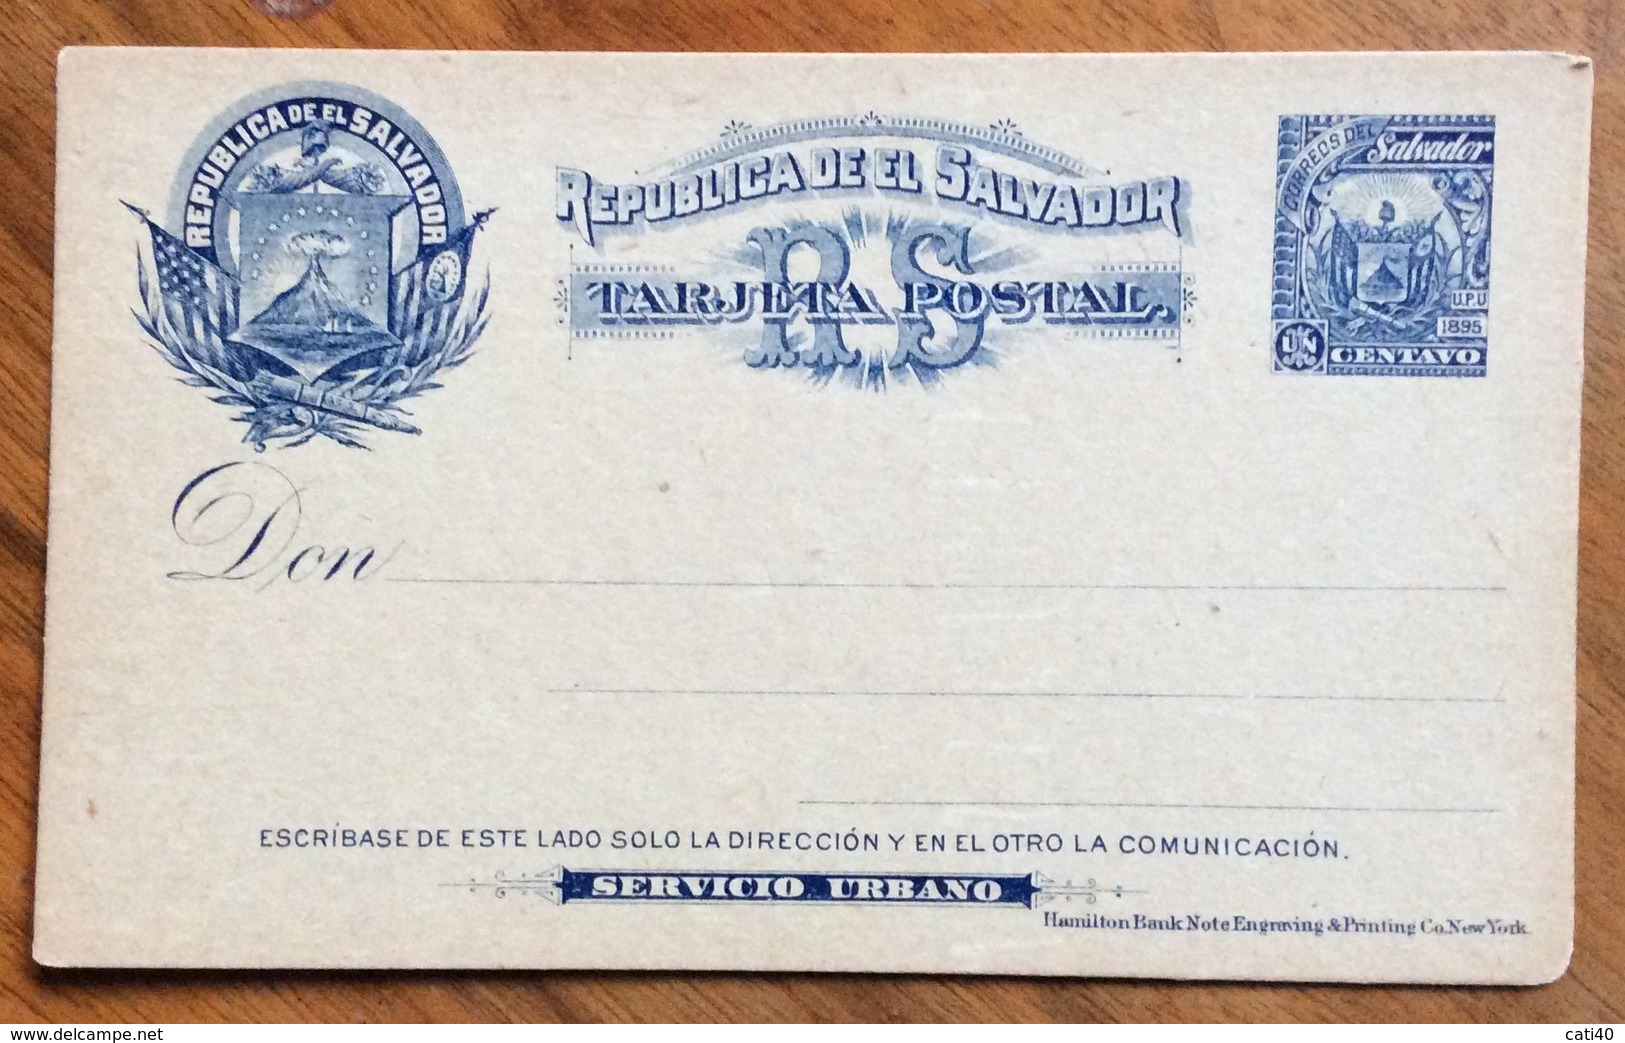 EL SALVADOR 1895  TARJETA POSTAL CARD 1 CENTAVO  SERVICIO URBANO - Postal Stationery